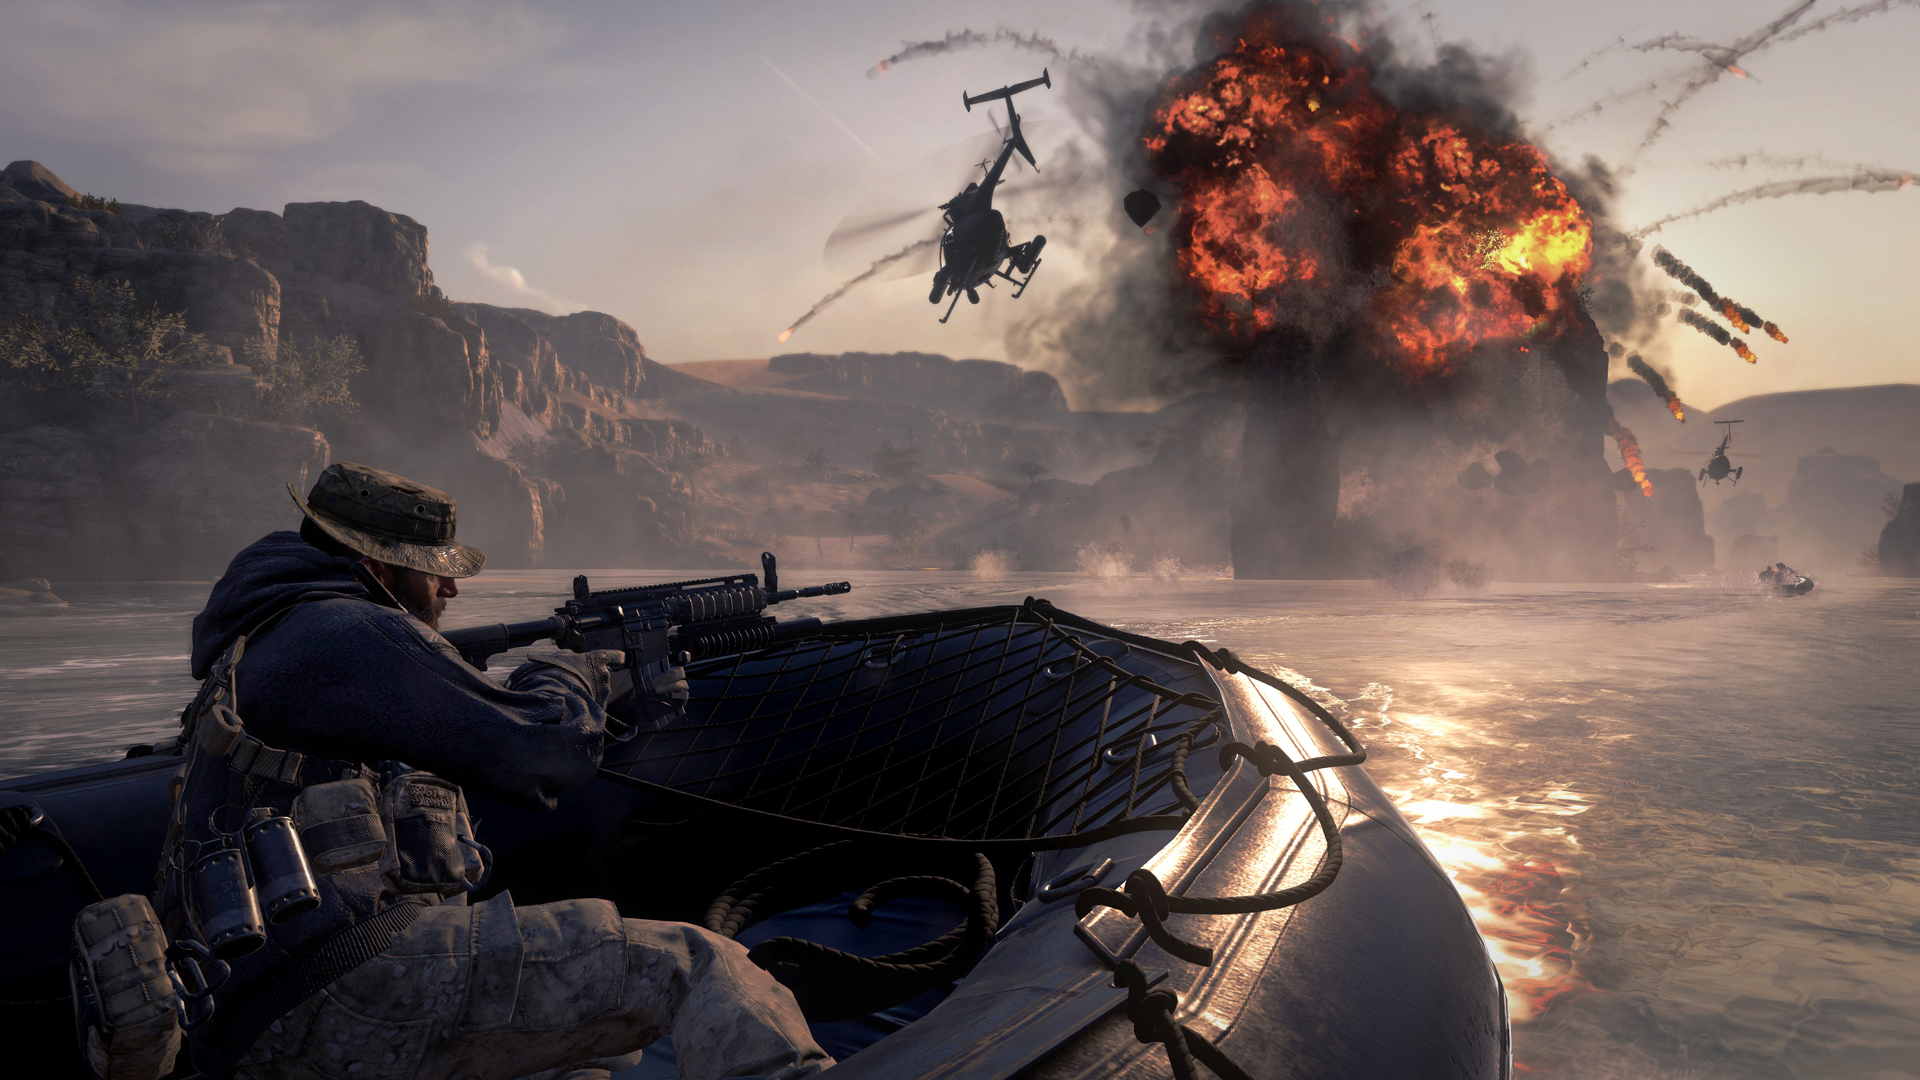 Call of Duty®: Modern Warfare® 2 Campaign Remastered - Call of Duty: MW2CR  | Battle.net